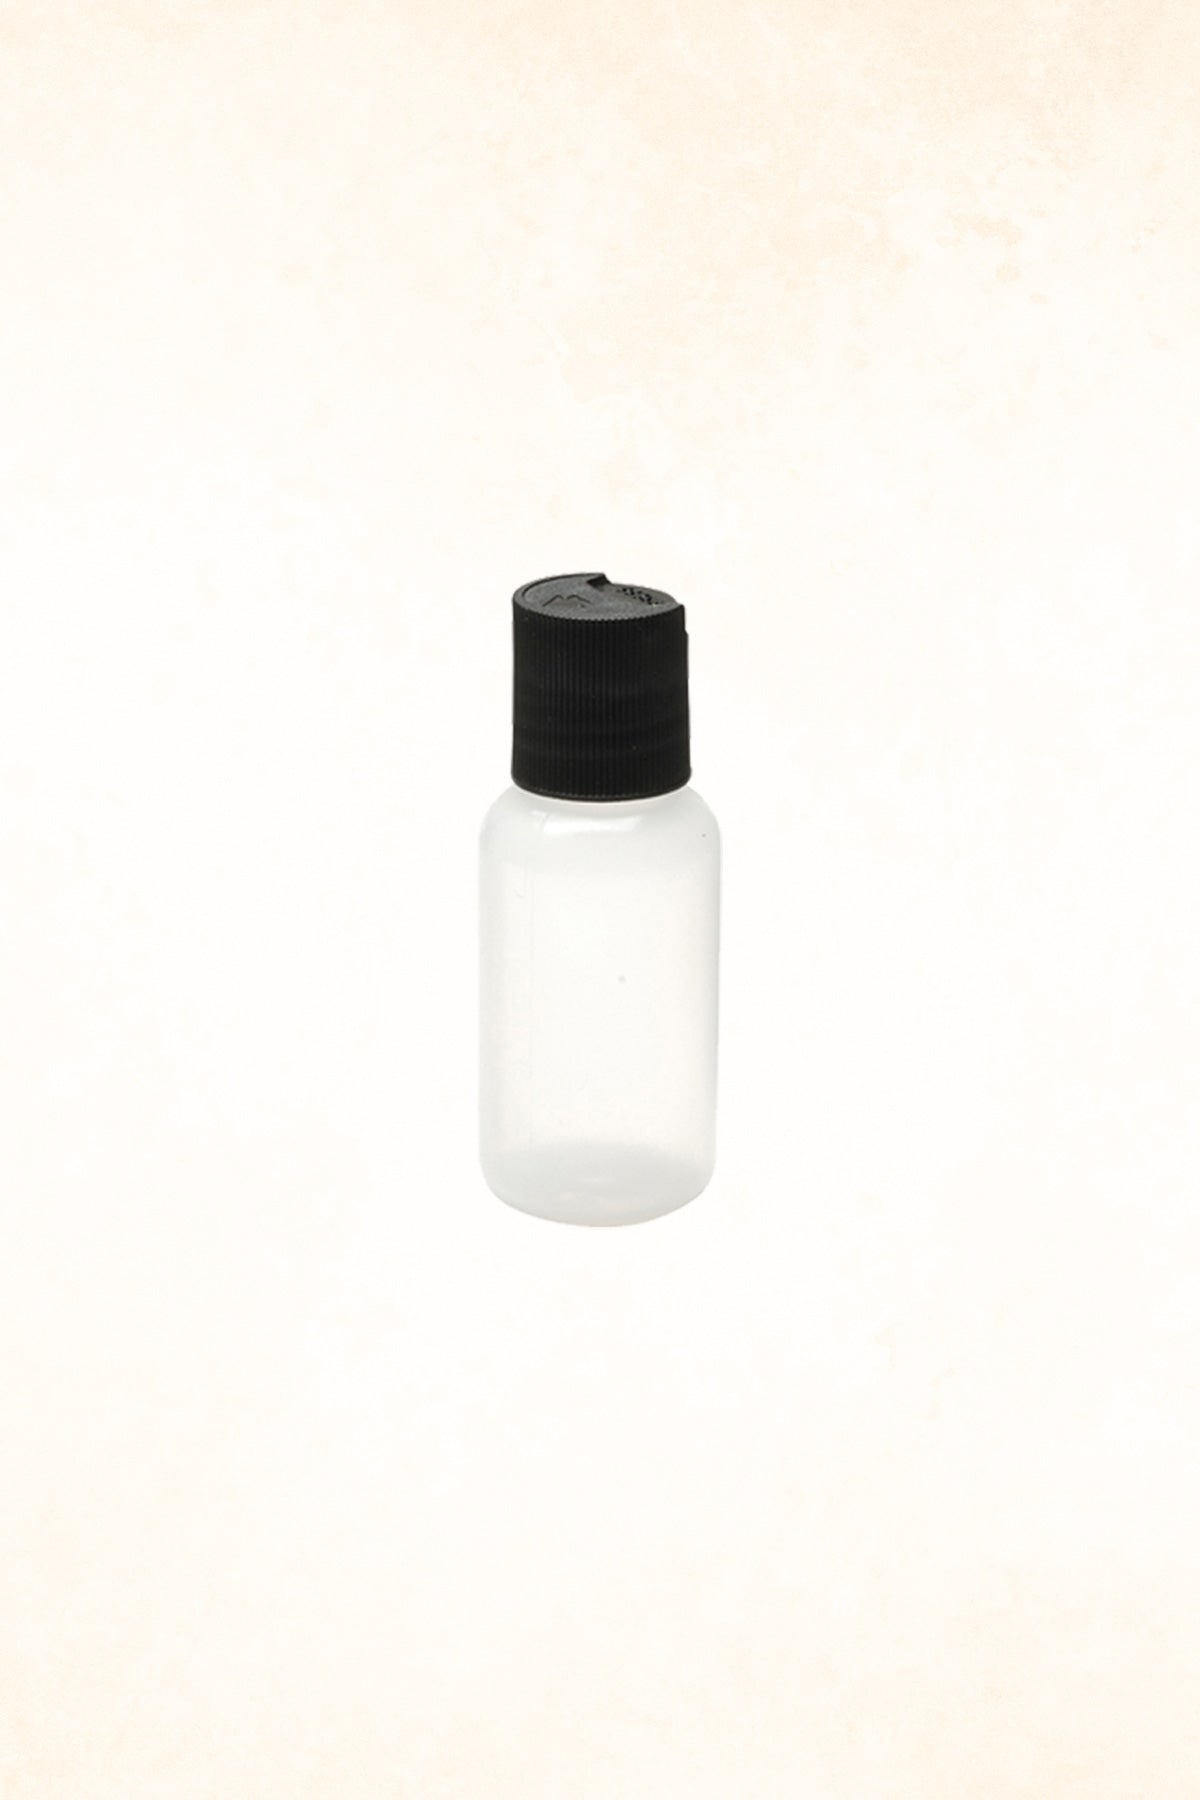 Monda Studio - Disposable Press Cap Bottle 1 oz / 28,35 Grams - MST203-1